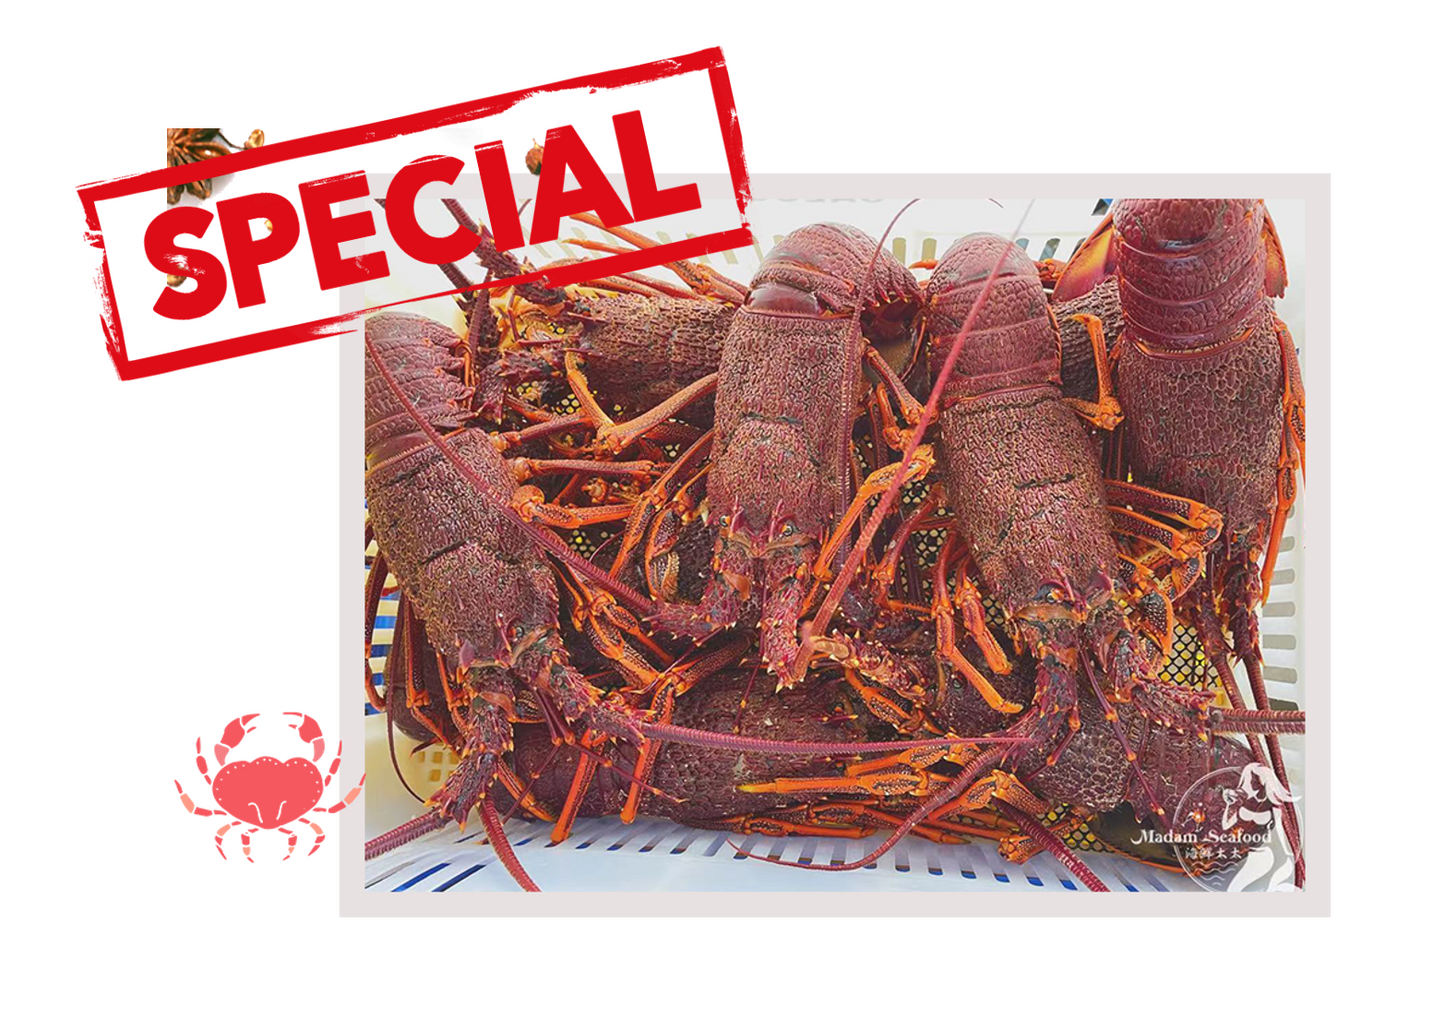 Live Southern Rock Lobster (600g-1000g)